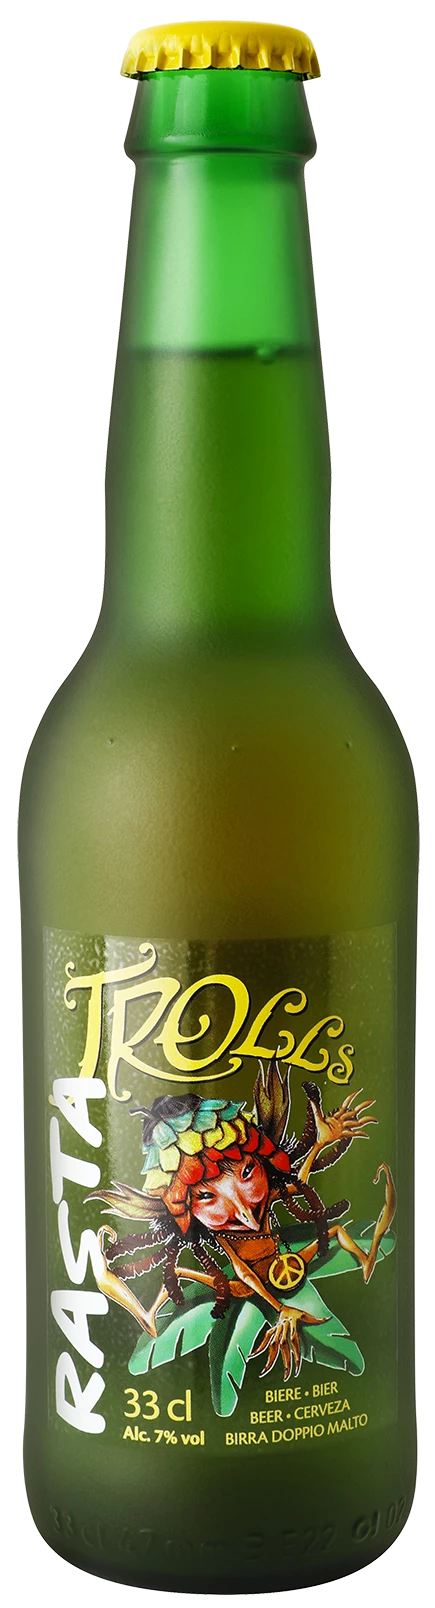 Bière Blonde Belge, 7°, 33cl - RASTA TROLLS